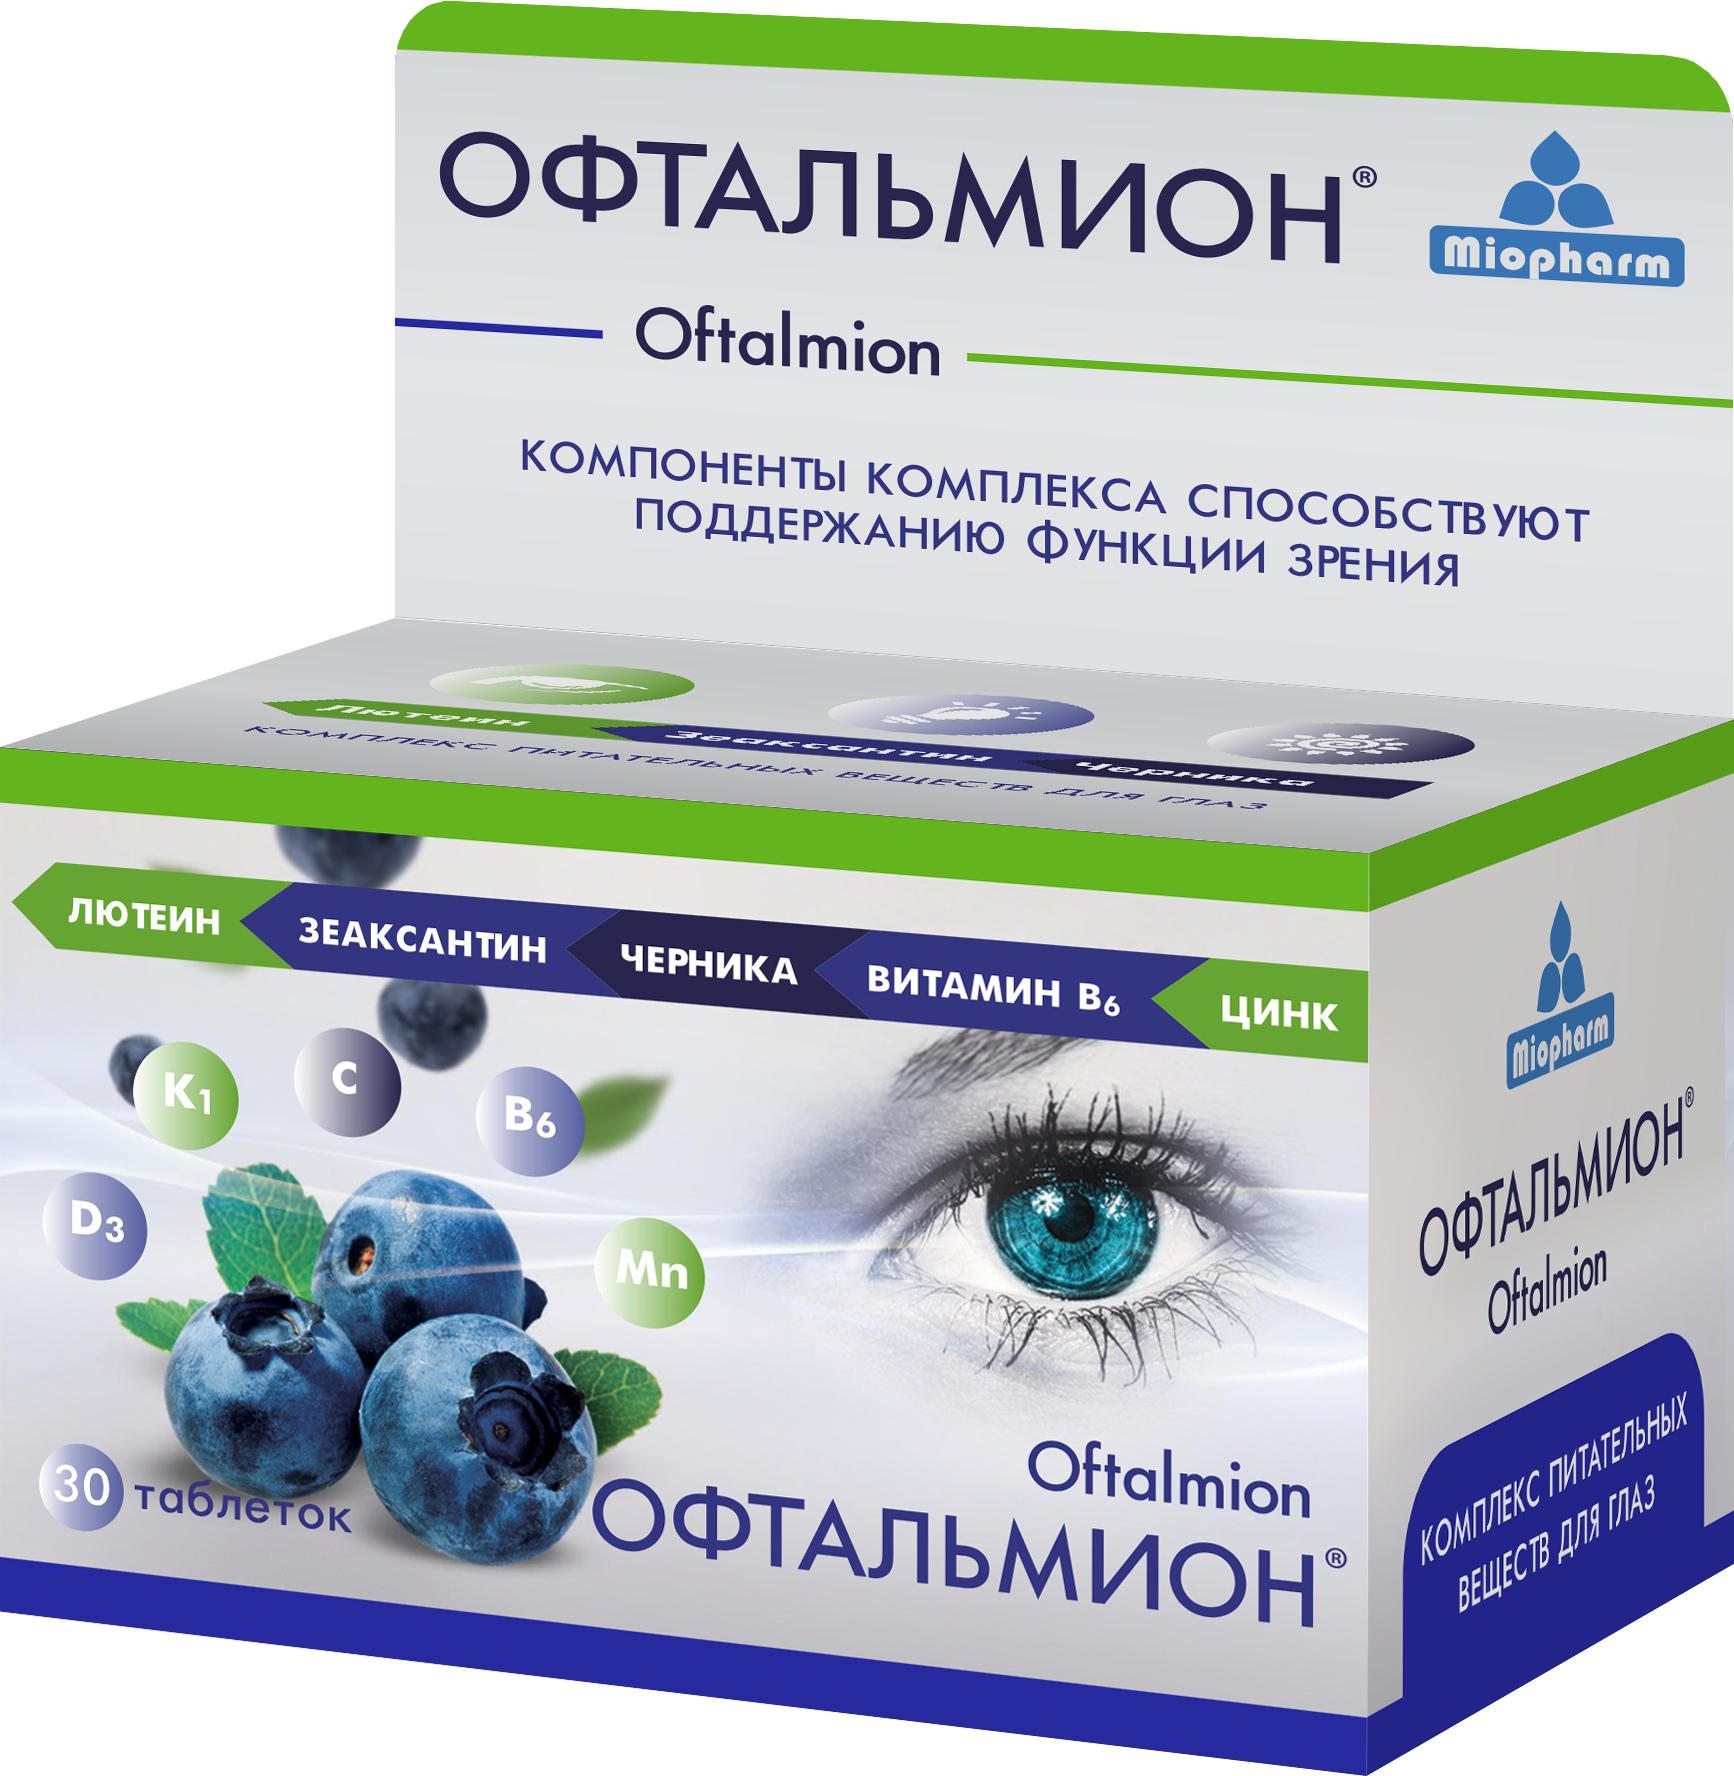 Офтальмион Миофарм 30 таб. Лютеин + Зеаксантин + Черника + витамины для глаз и зрения.